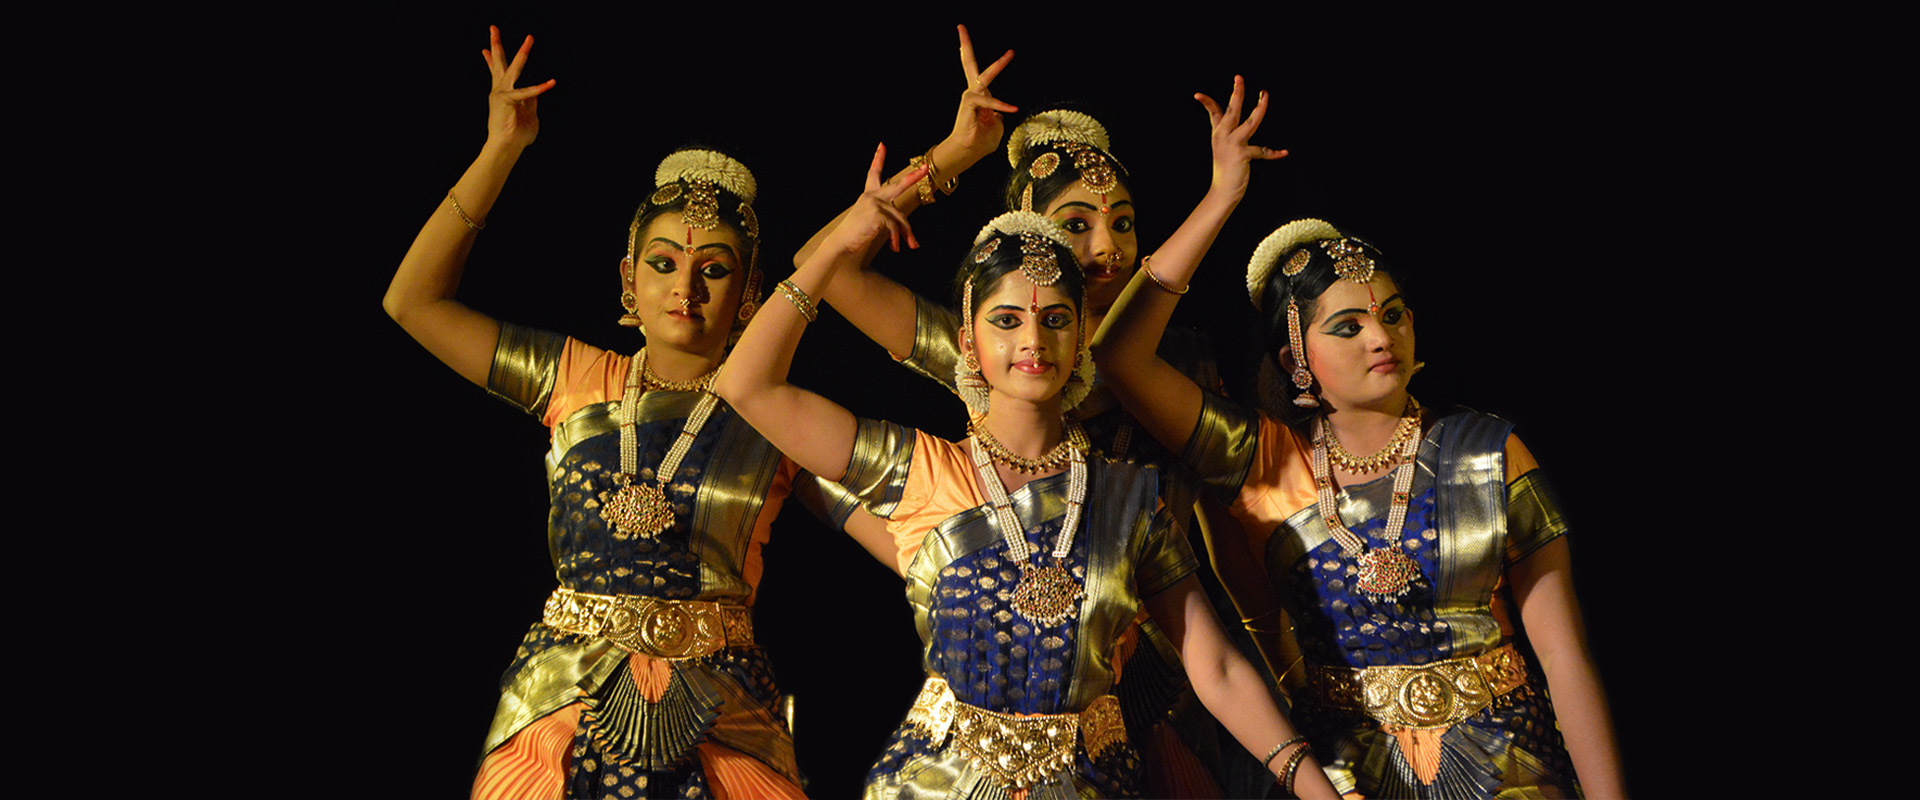 bharatanatyam dance form india